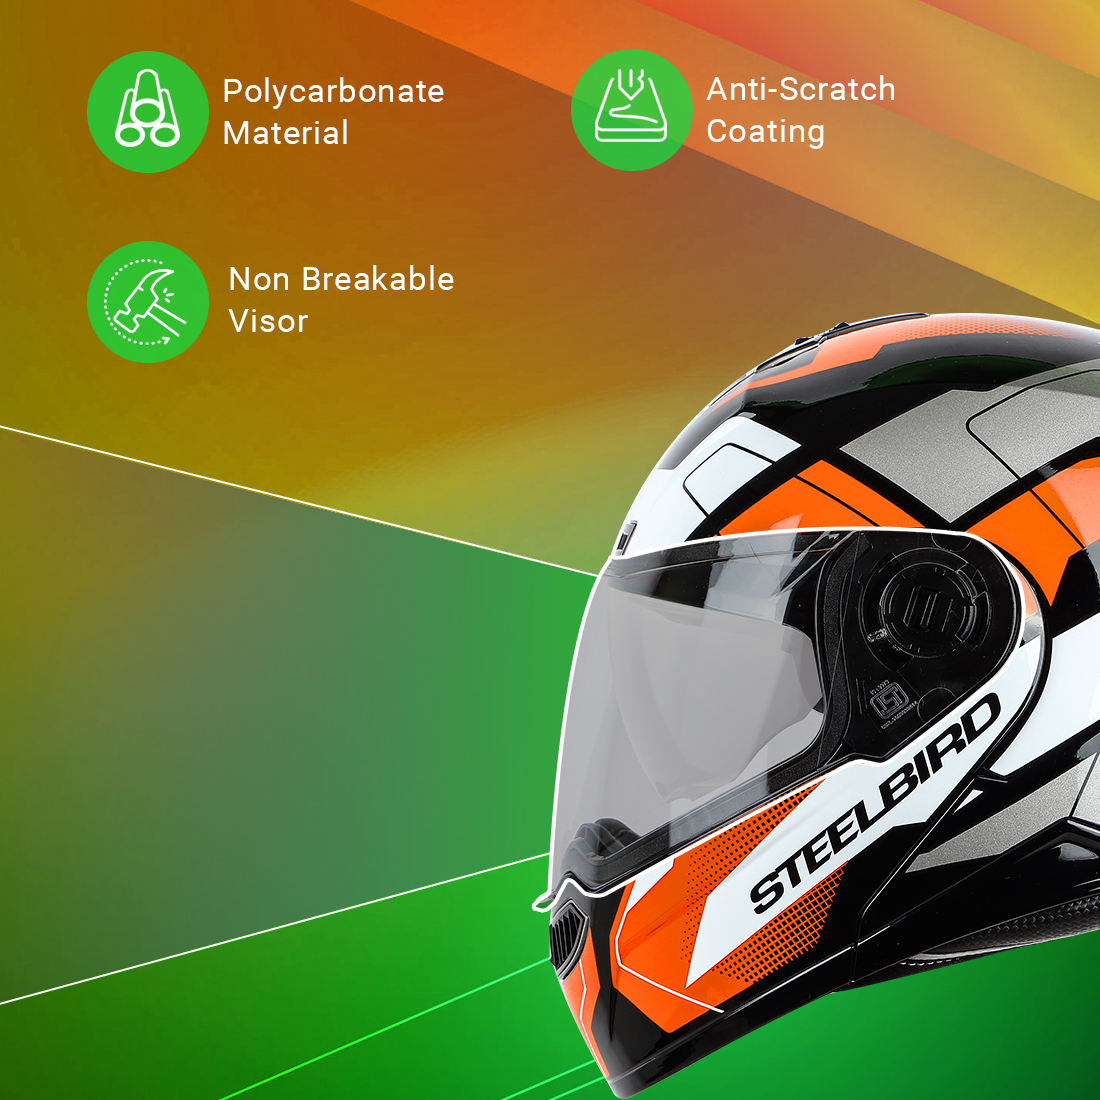 Steelbird SBA-7 Huracan ISI Certified Flip-Up Helmet For Men And Women With Inner Sun Shield (Glossy Black Orange)